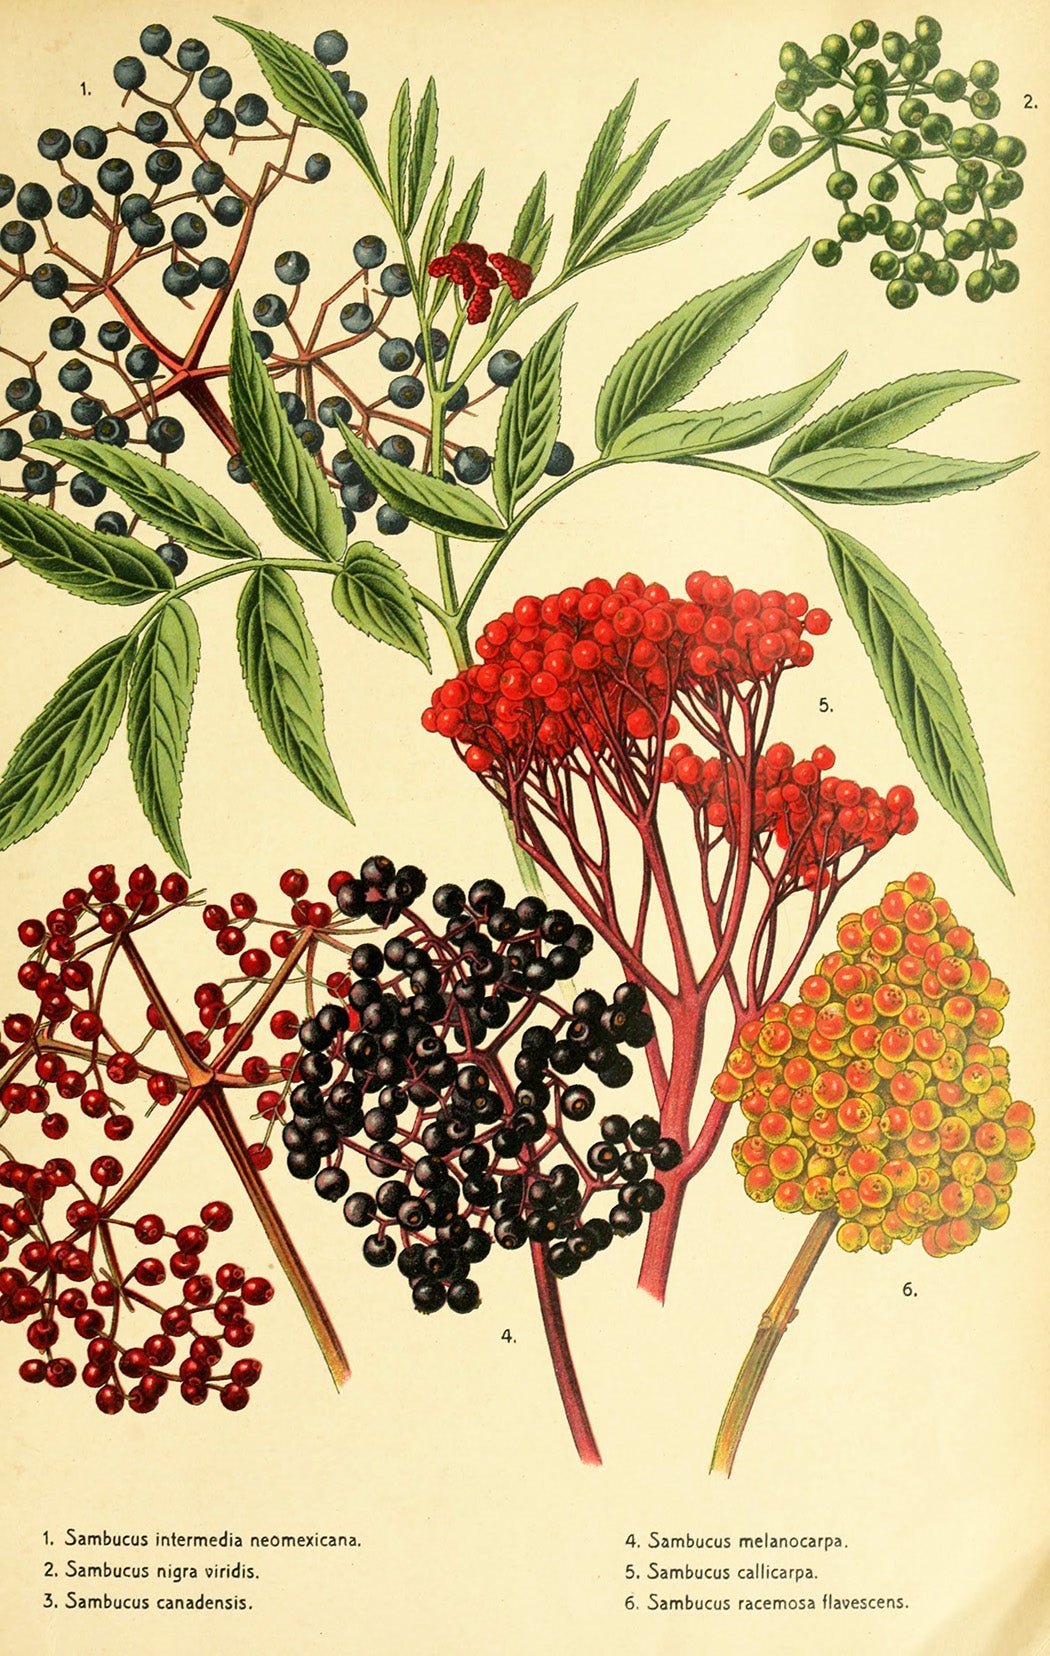 An illustration of several species of elderberry